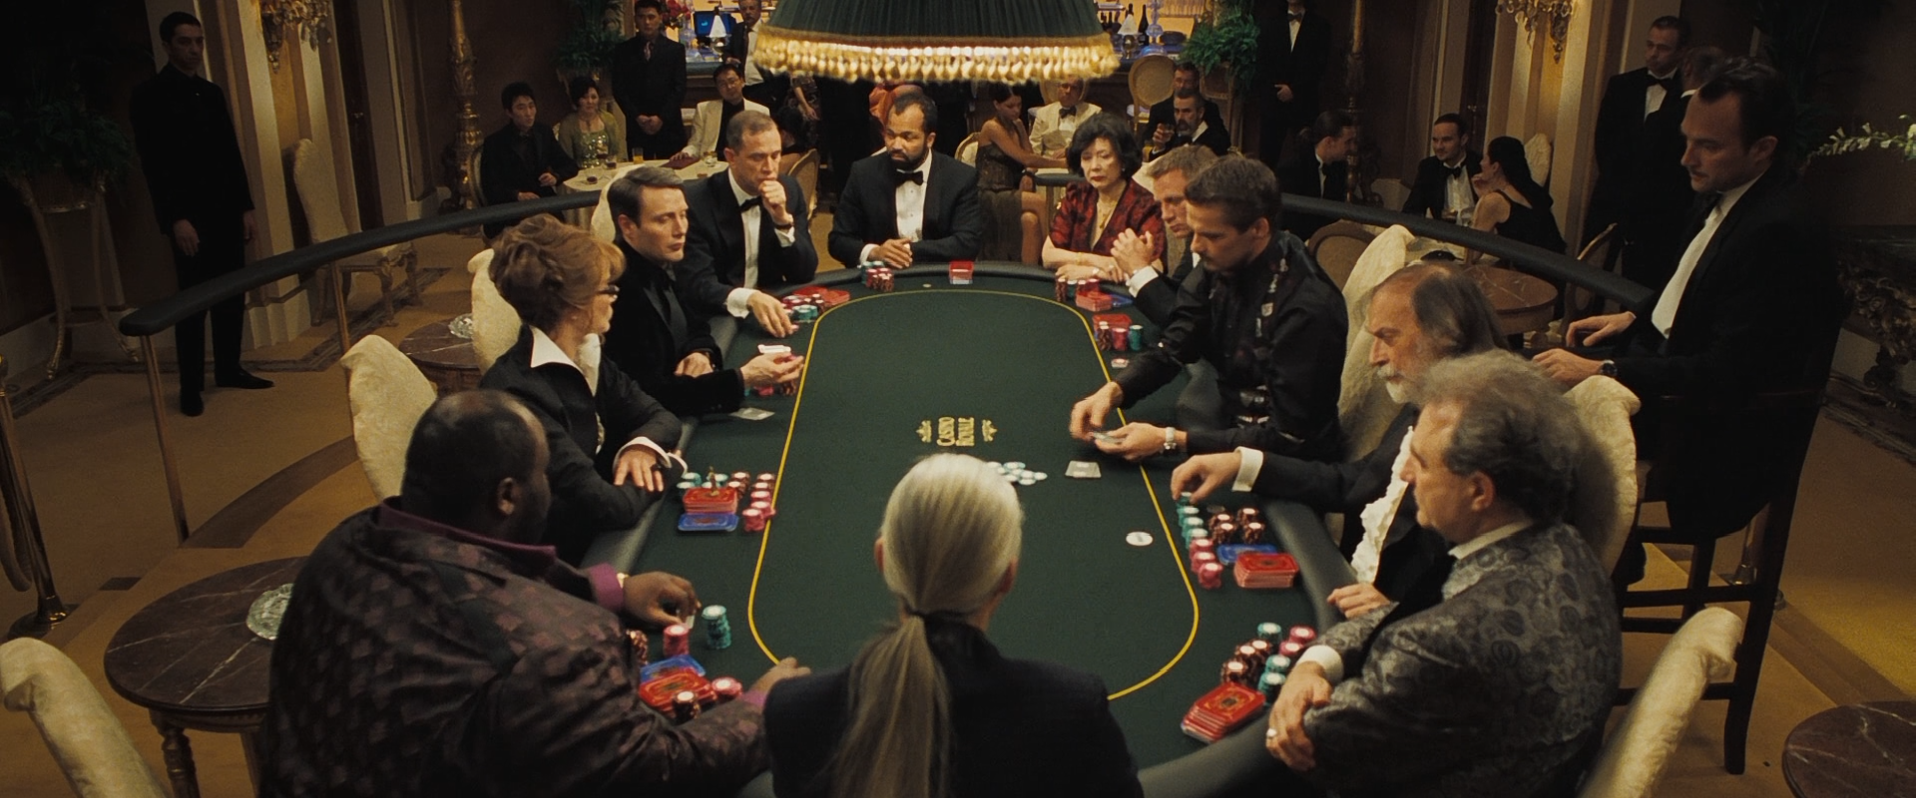 james bond casino royale poker car scene